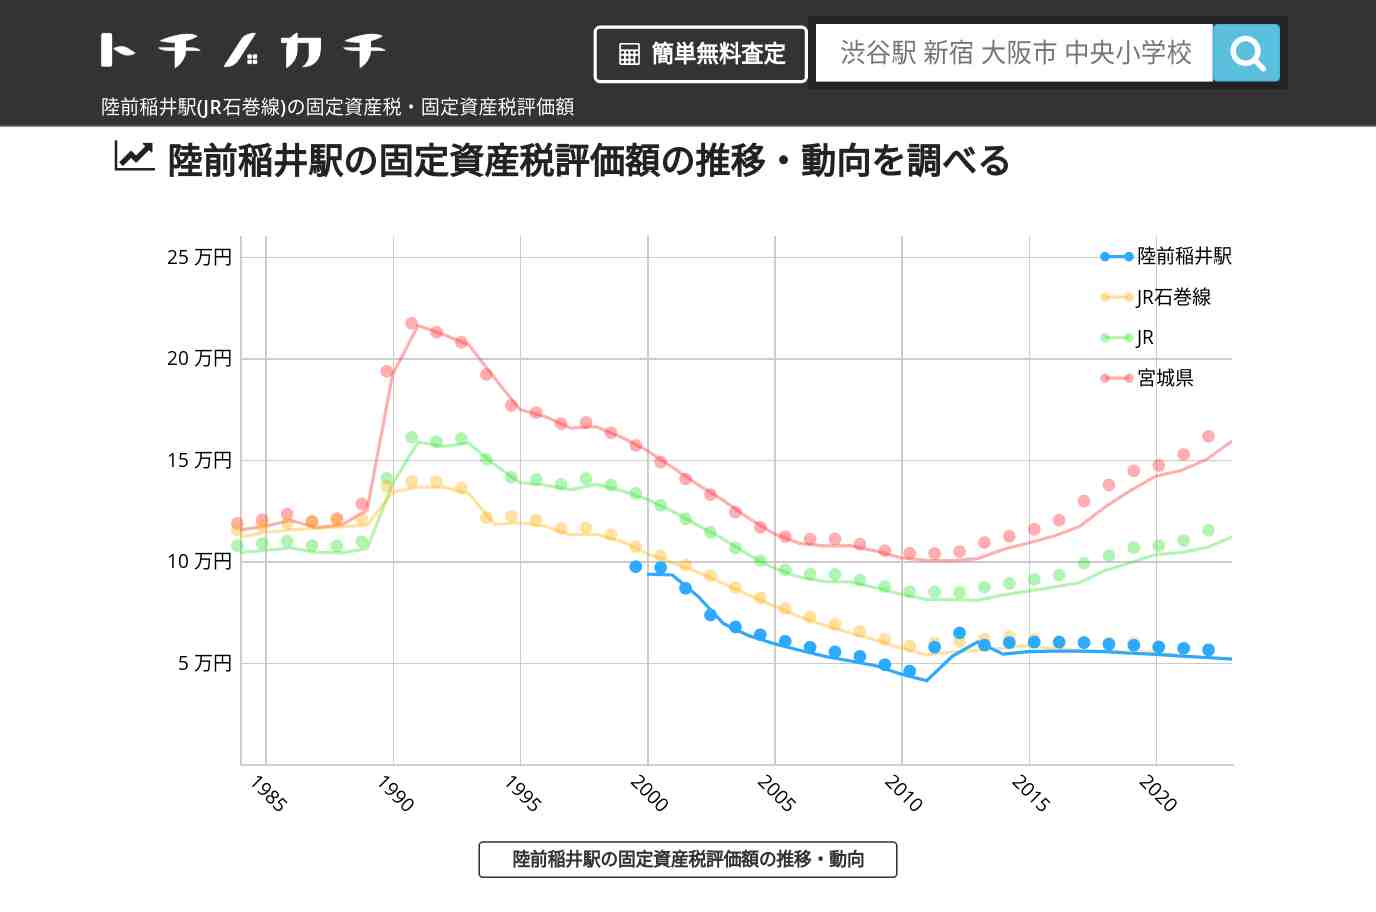 陸前稲井駅(JR石巻線)の固定資産税・固定資産税評価額 | トチノカチ